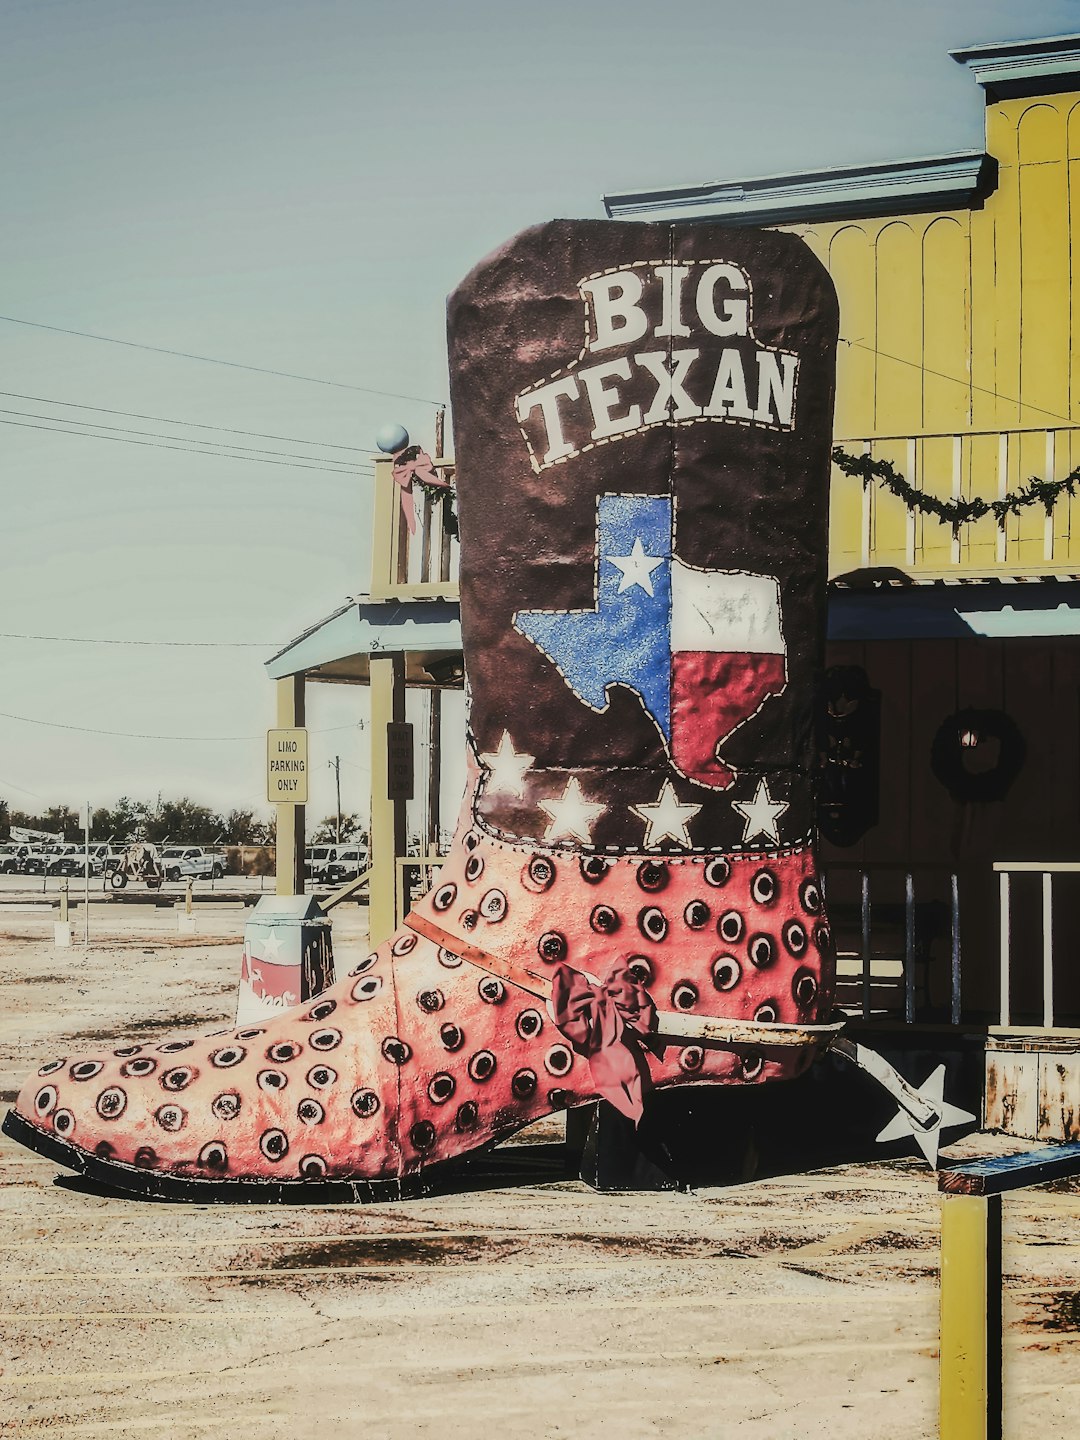 Big Texas boot next to building